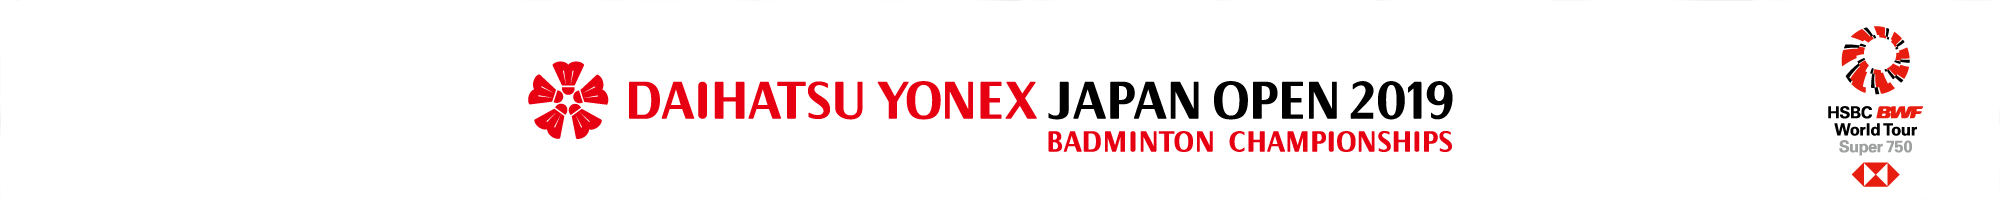 DAIHATSU YONEX JAPAN OPEN2019 BADMINTON CHAMPIONSHIPS